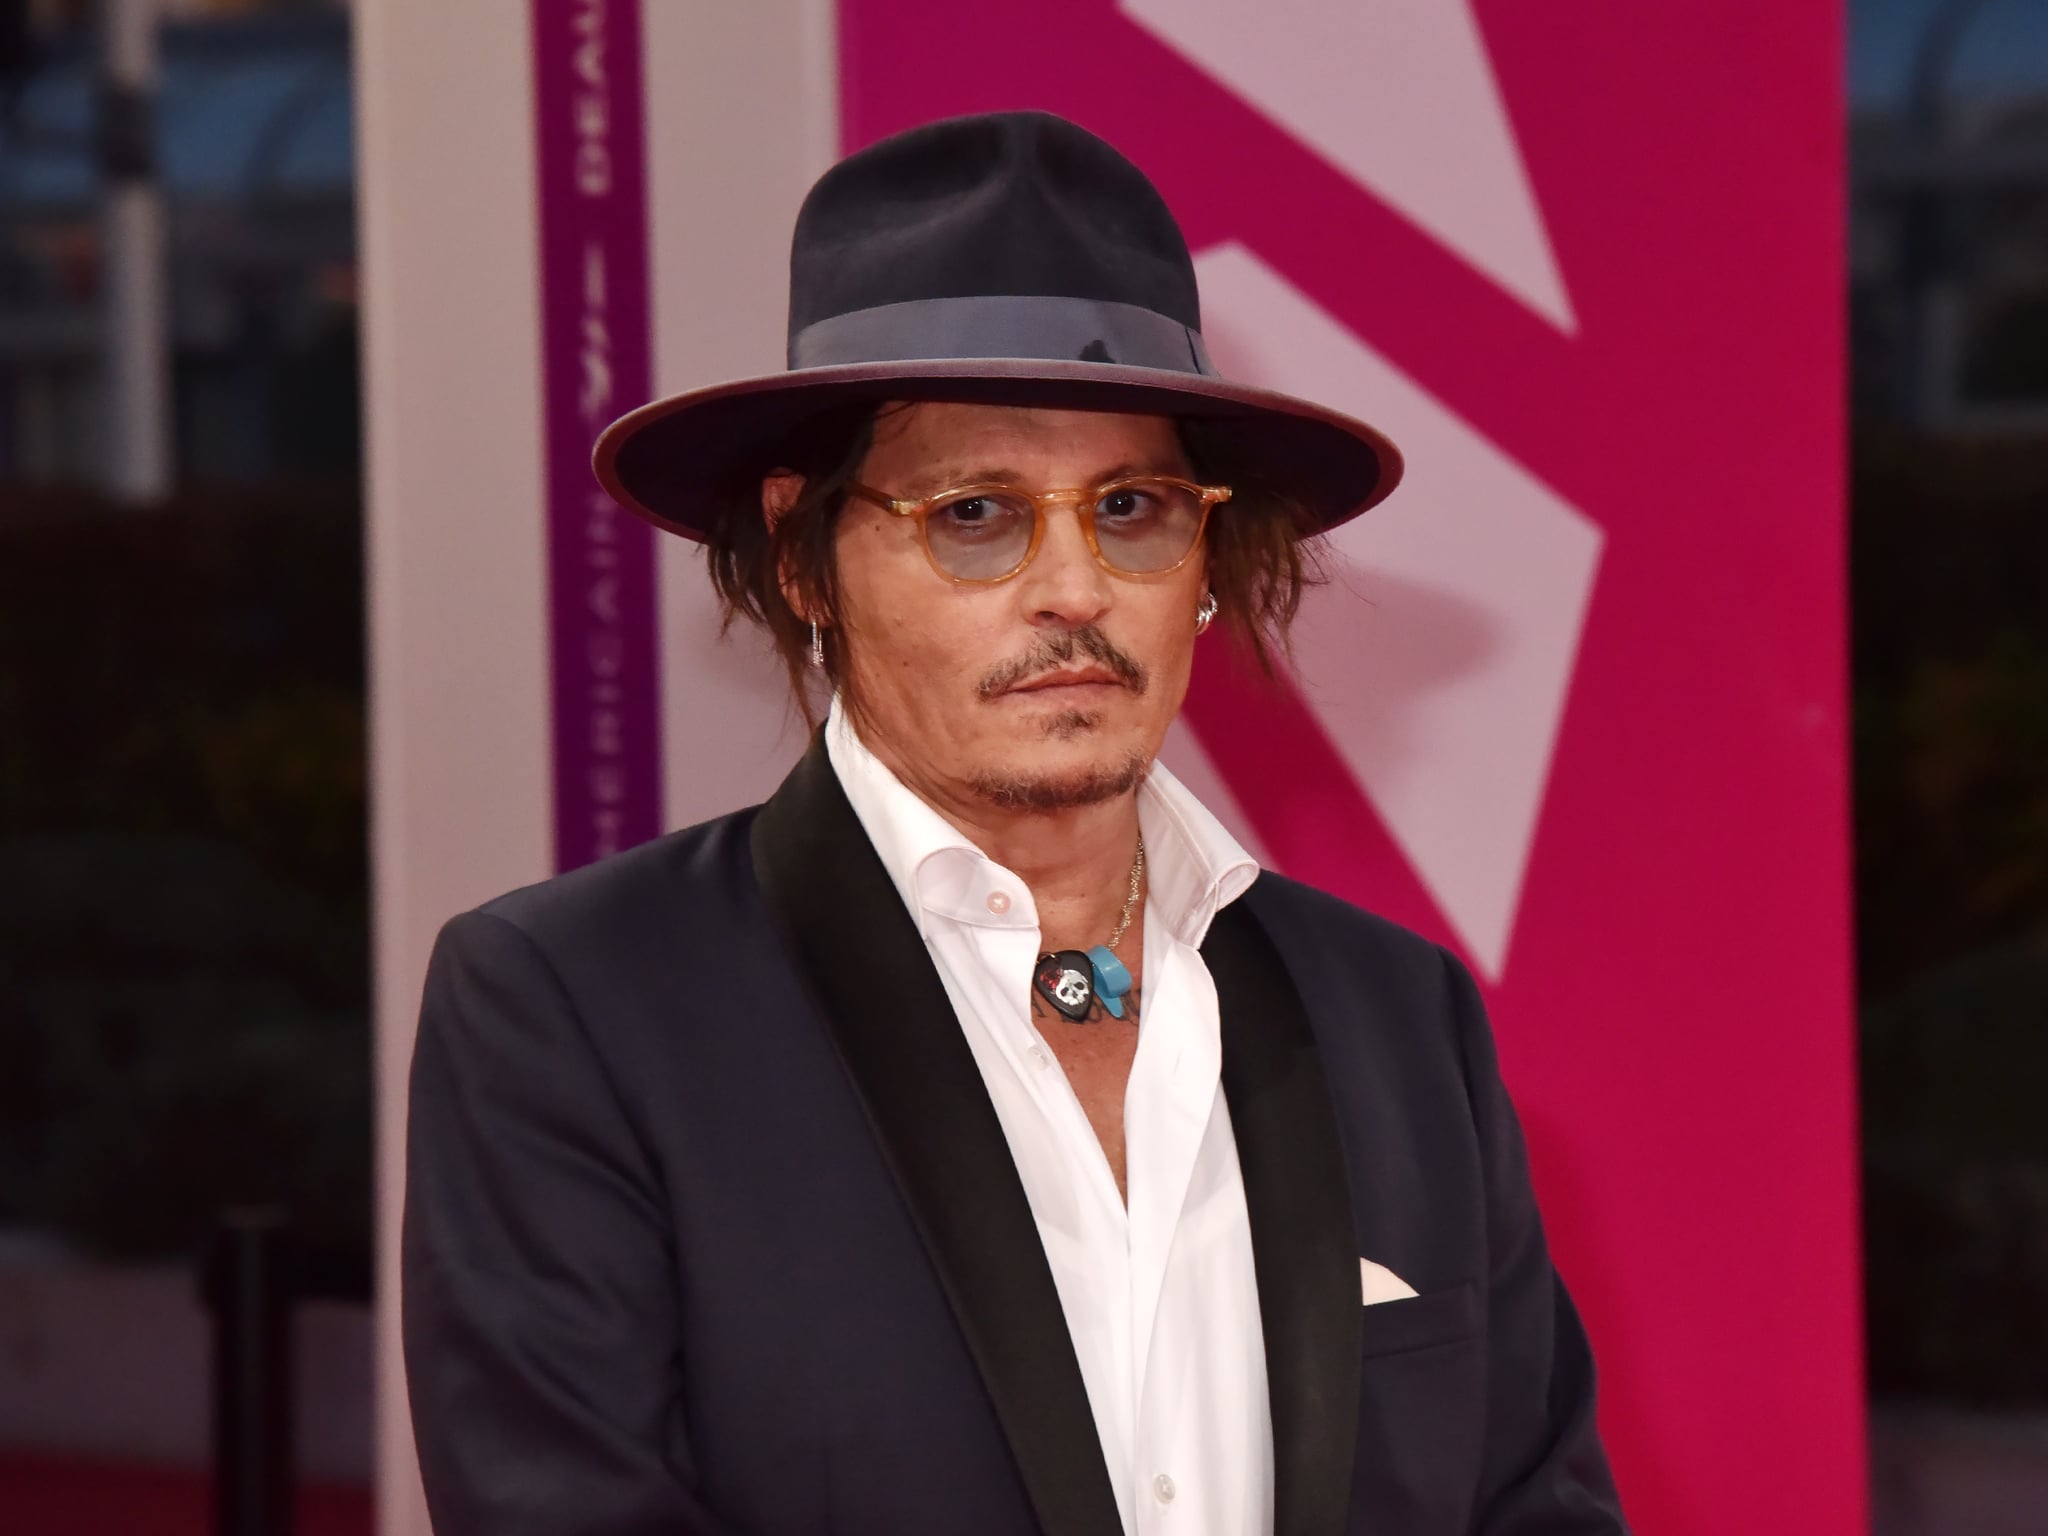 DEAUVILLE, FRANCE - SEPTEMBER 05: Actor Johnny Depp attends the 